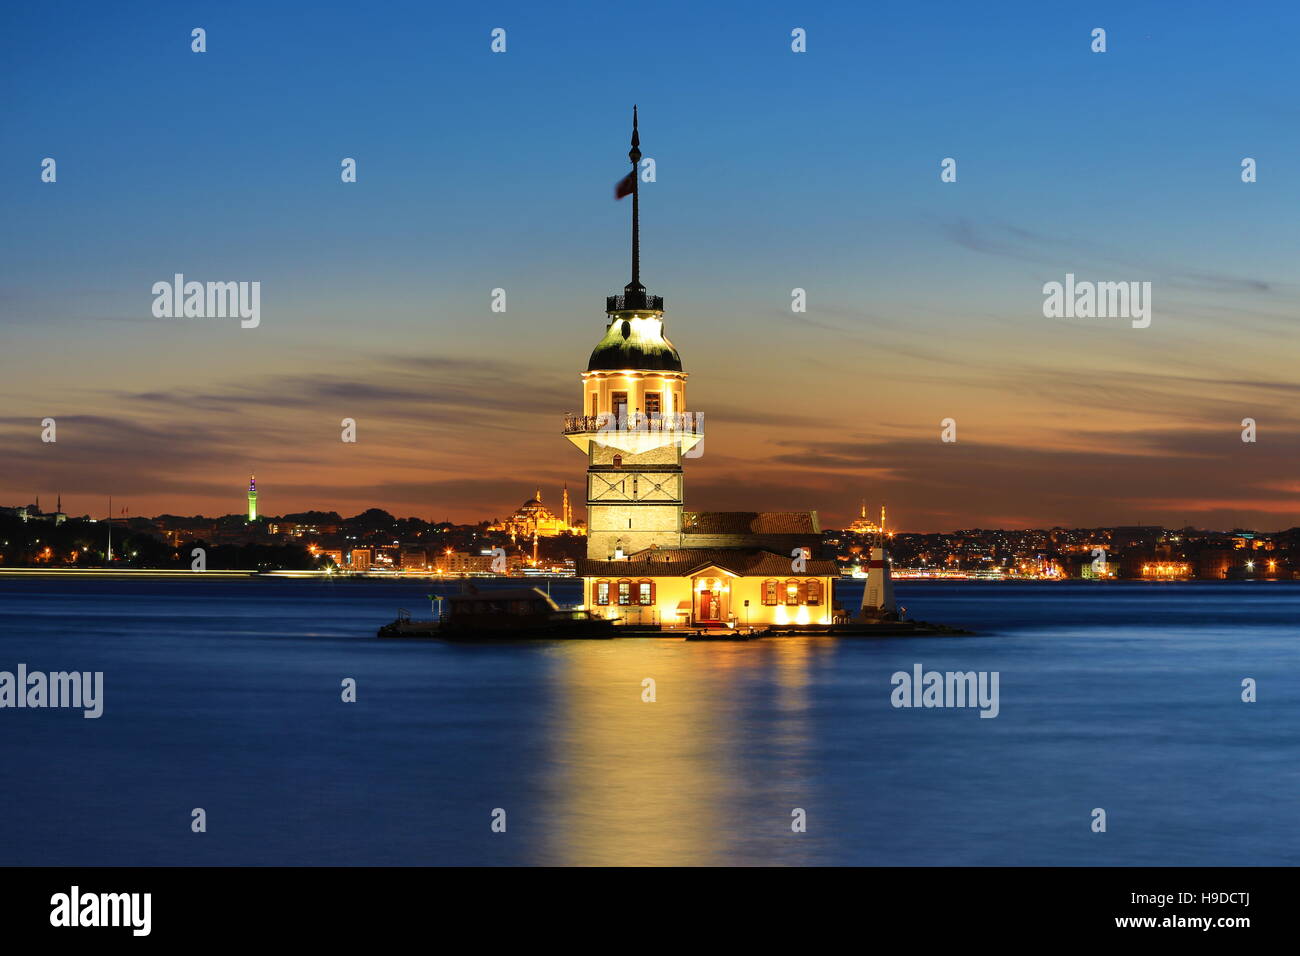 120x40cm Istanbul Maiden Leuchtturm Panorama Leanderturm kiz kulesi Sinus Art